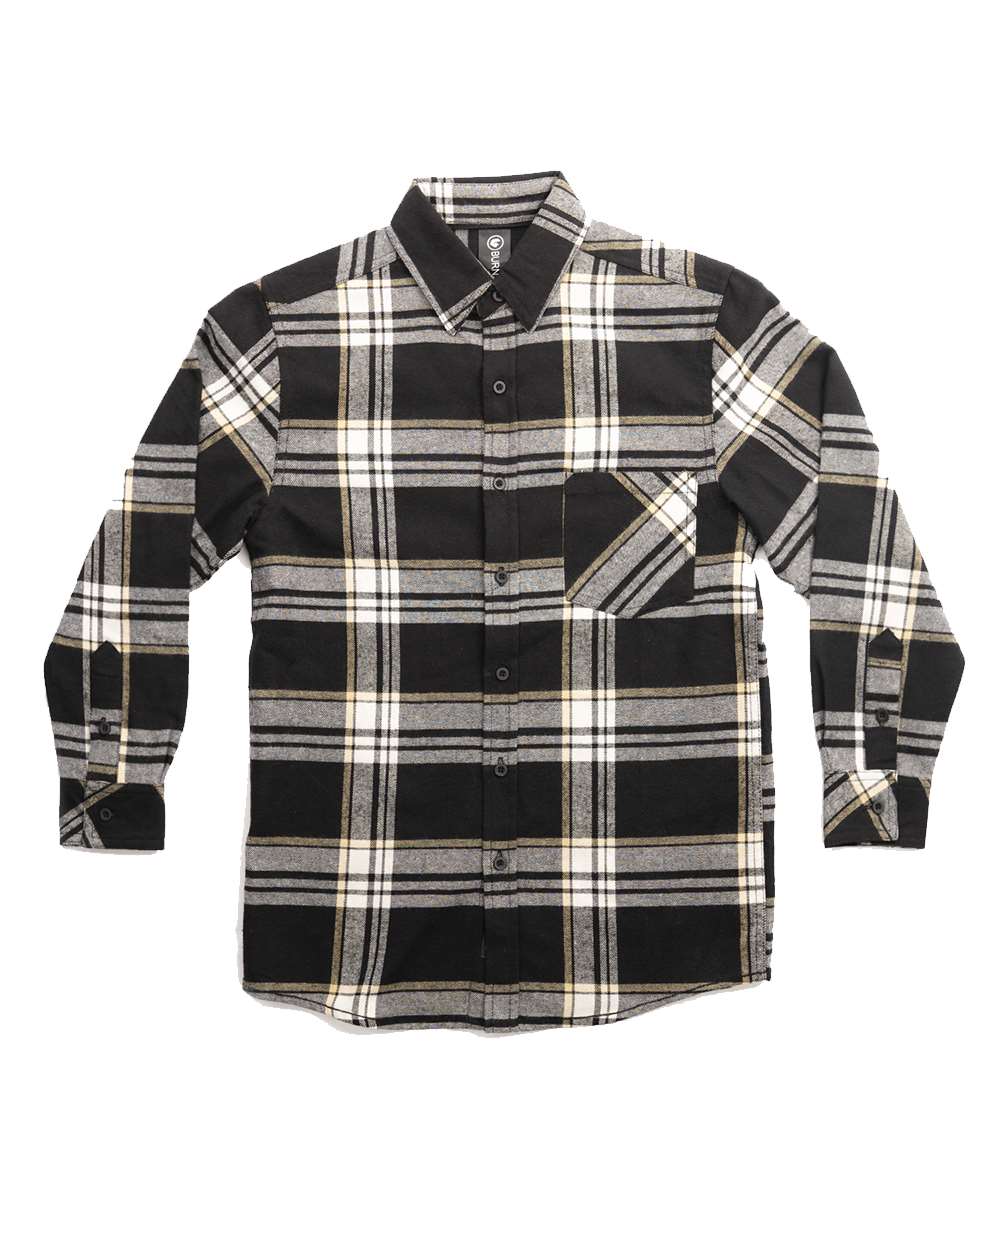 Burnside 4212 Drop Ship - Youth Open Pocket Long Sleeve Flannel Shirt